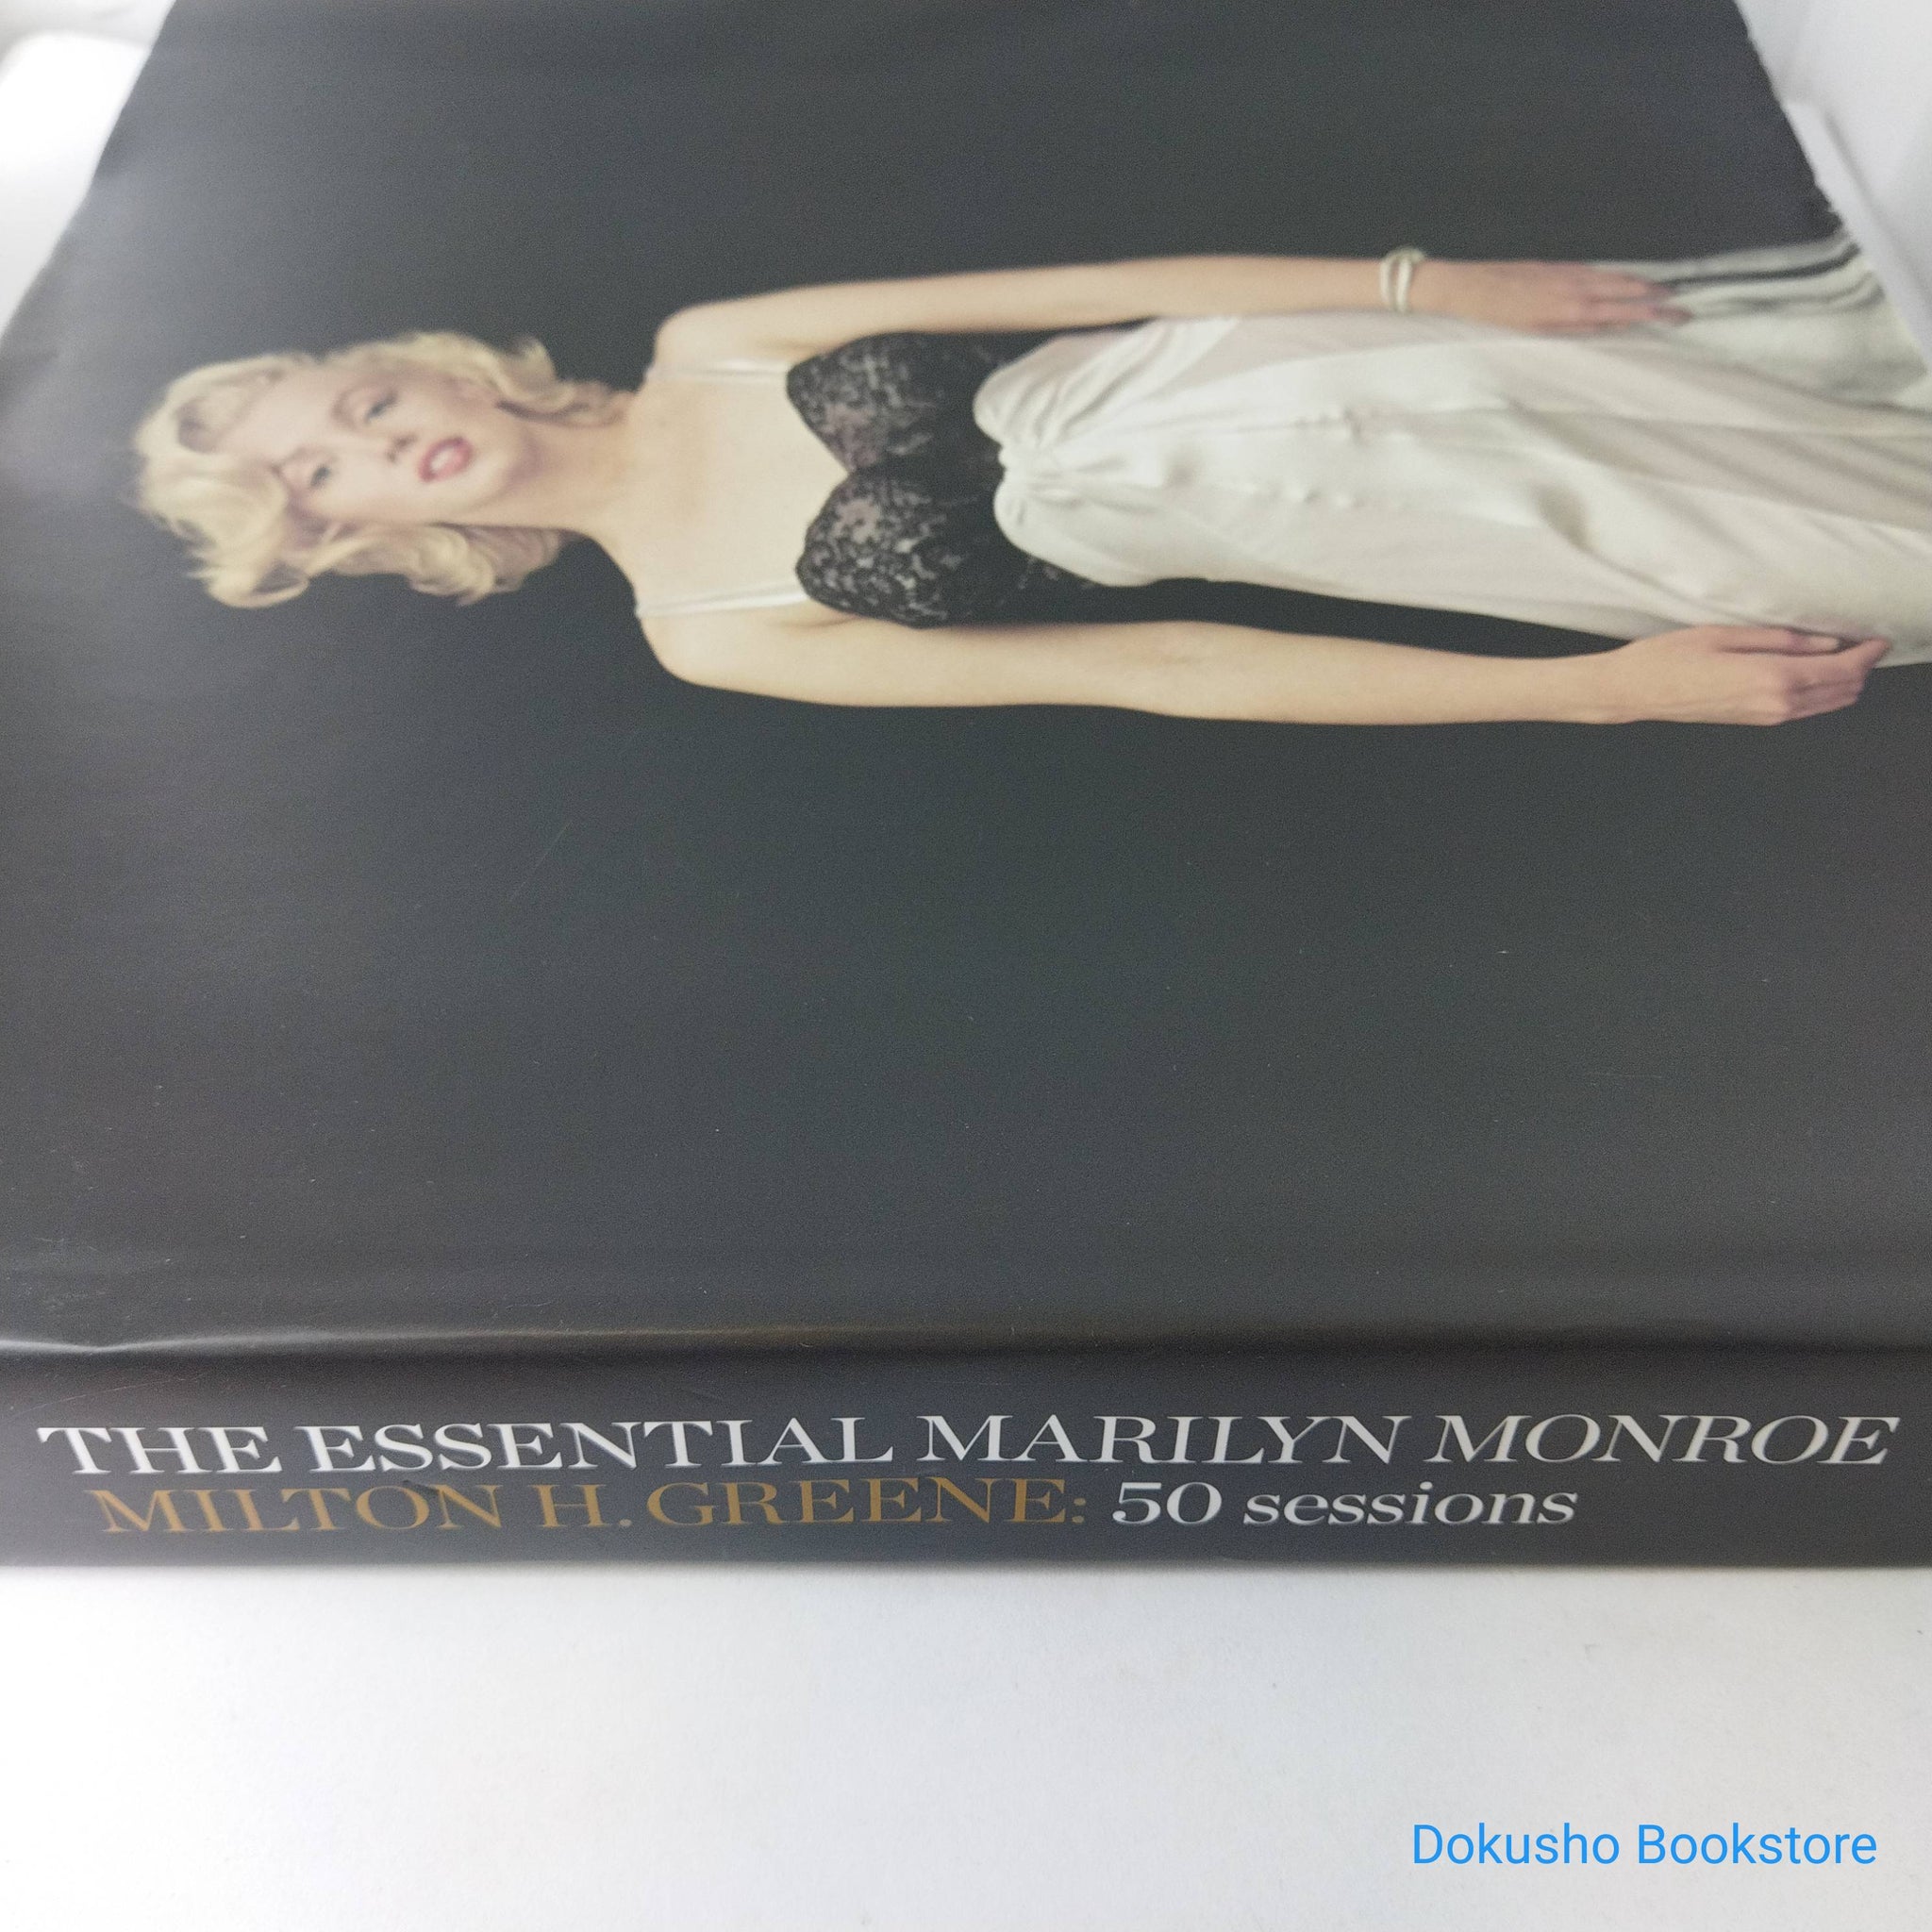 The Essential Marilyn Monroe (Reduced Size): Milton H. Greene: 50